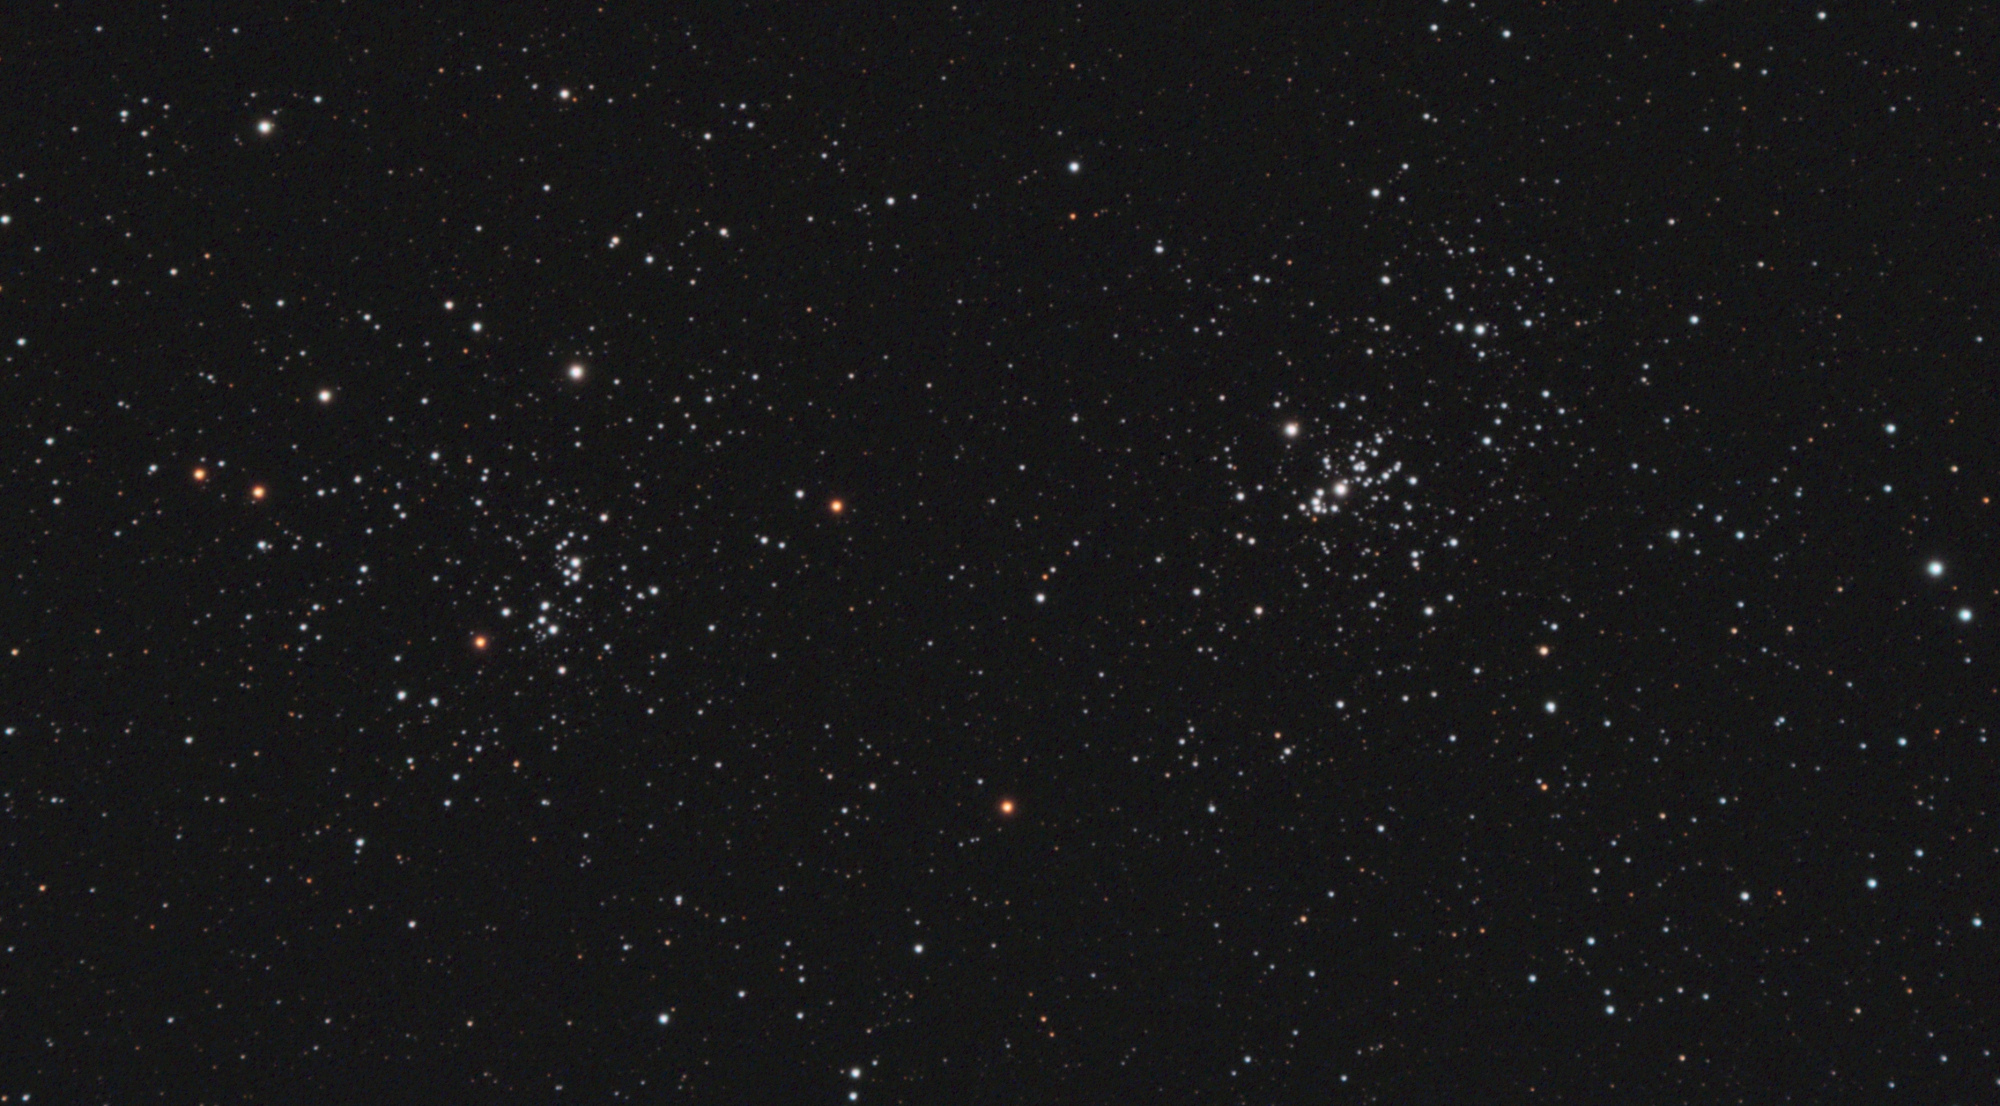 NGC884.jpg